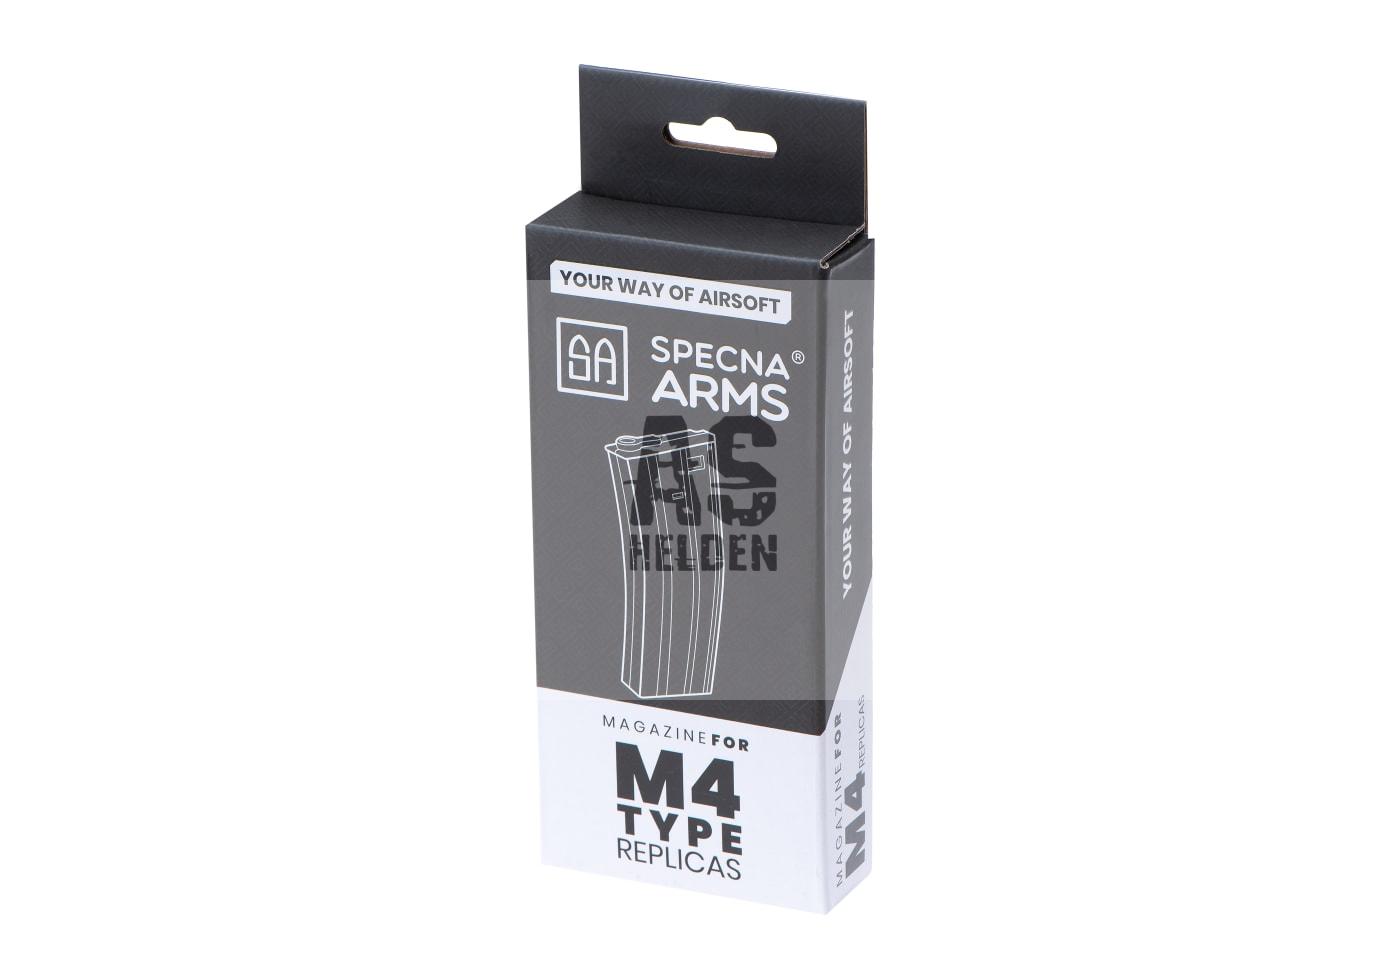 Magazine M4 Midcap Polymer 140rds - Grau (Specna Arms)